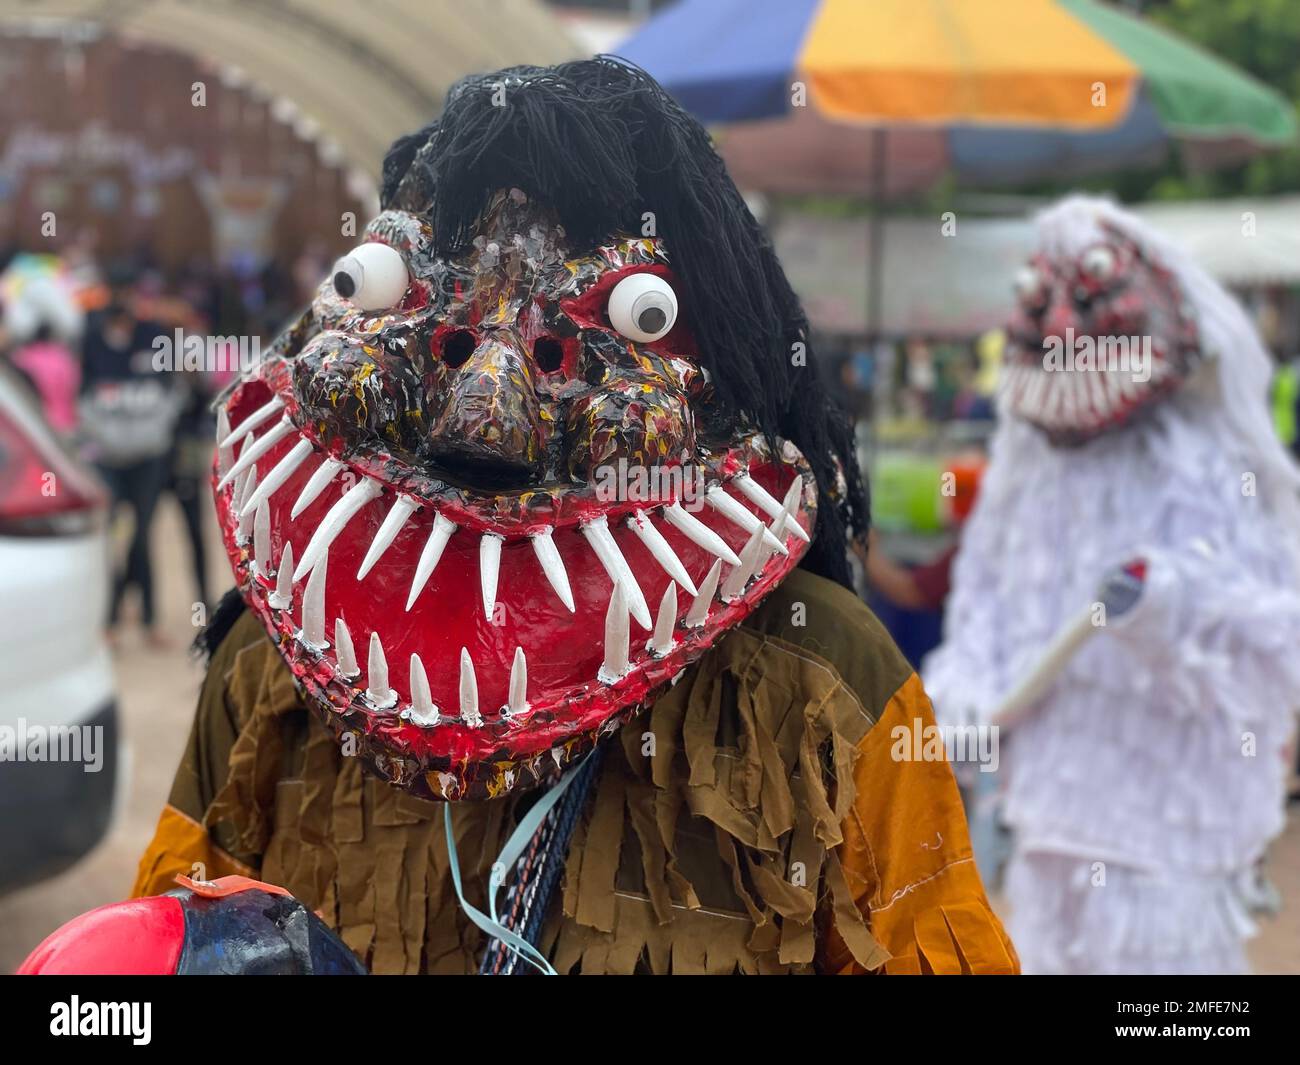 https://c8.alamy.com/compit/2mfe7n2/una-maschera-horror-durante-il-phi-ta-khon-ghost-festival-a-dan-sai-loei-thailandia-2mfe7n2.jpg